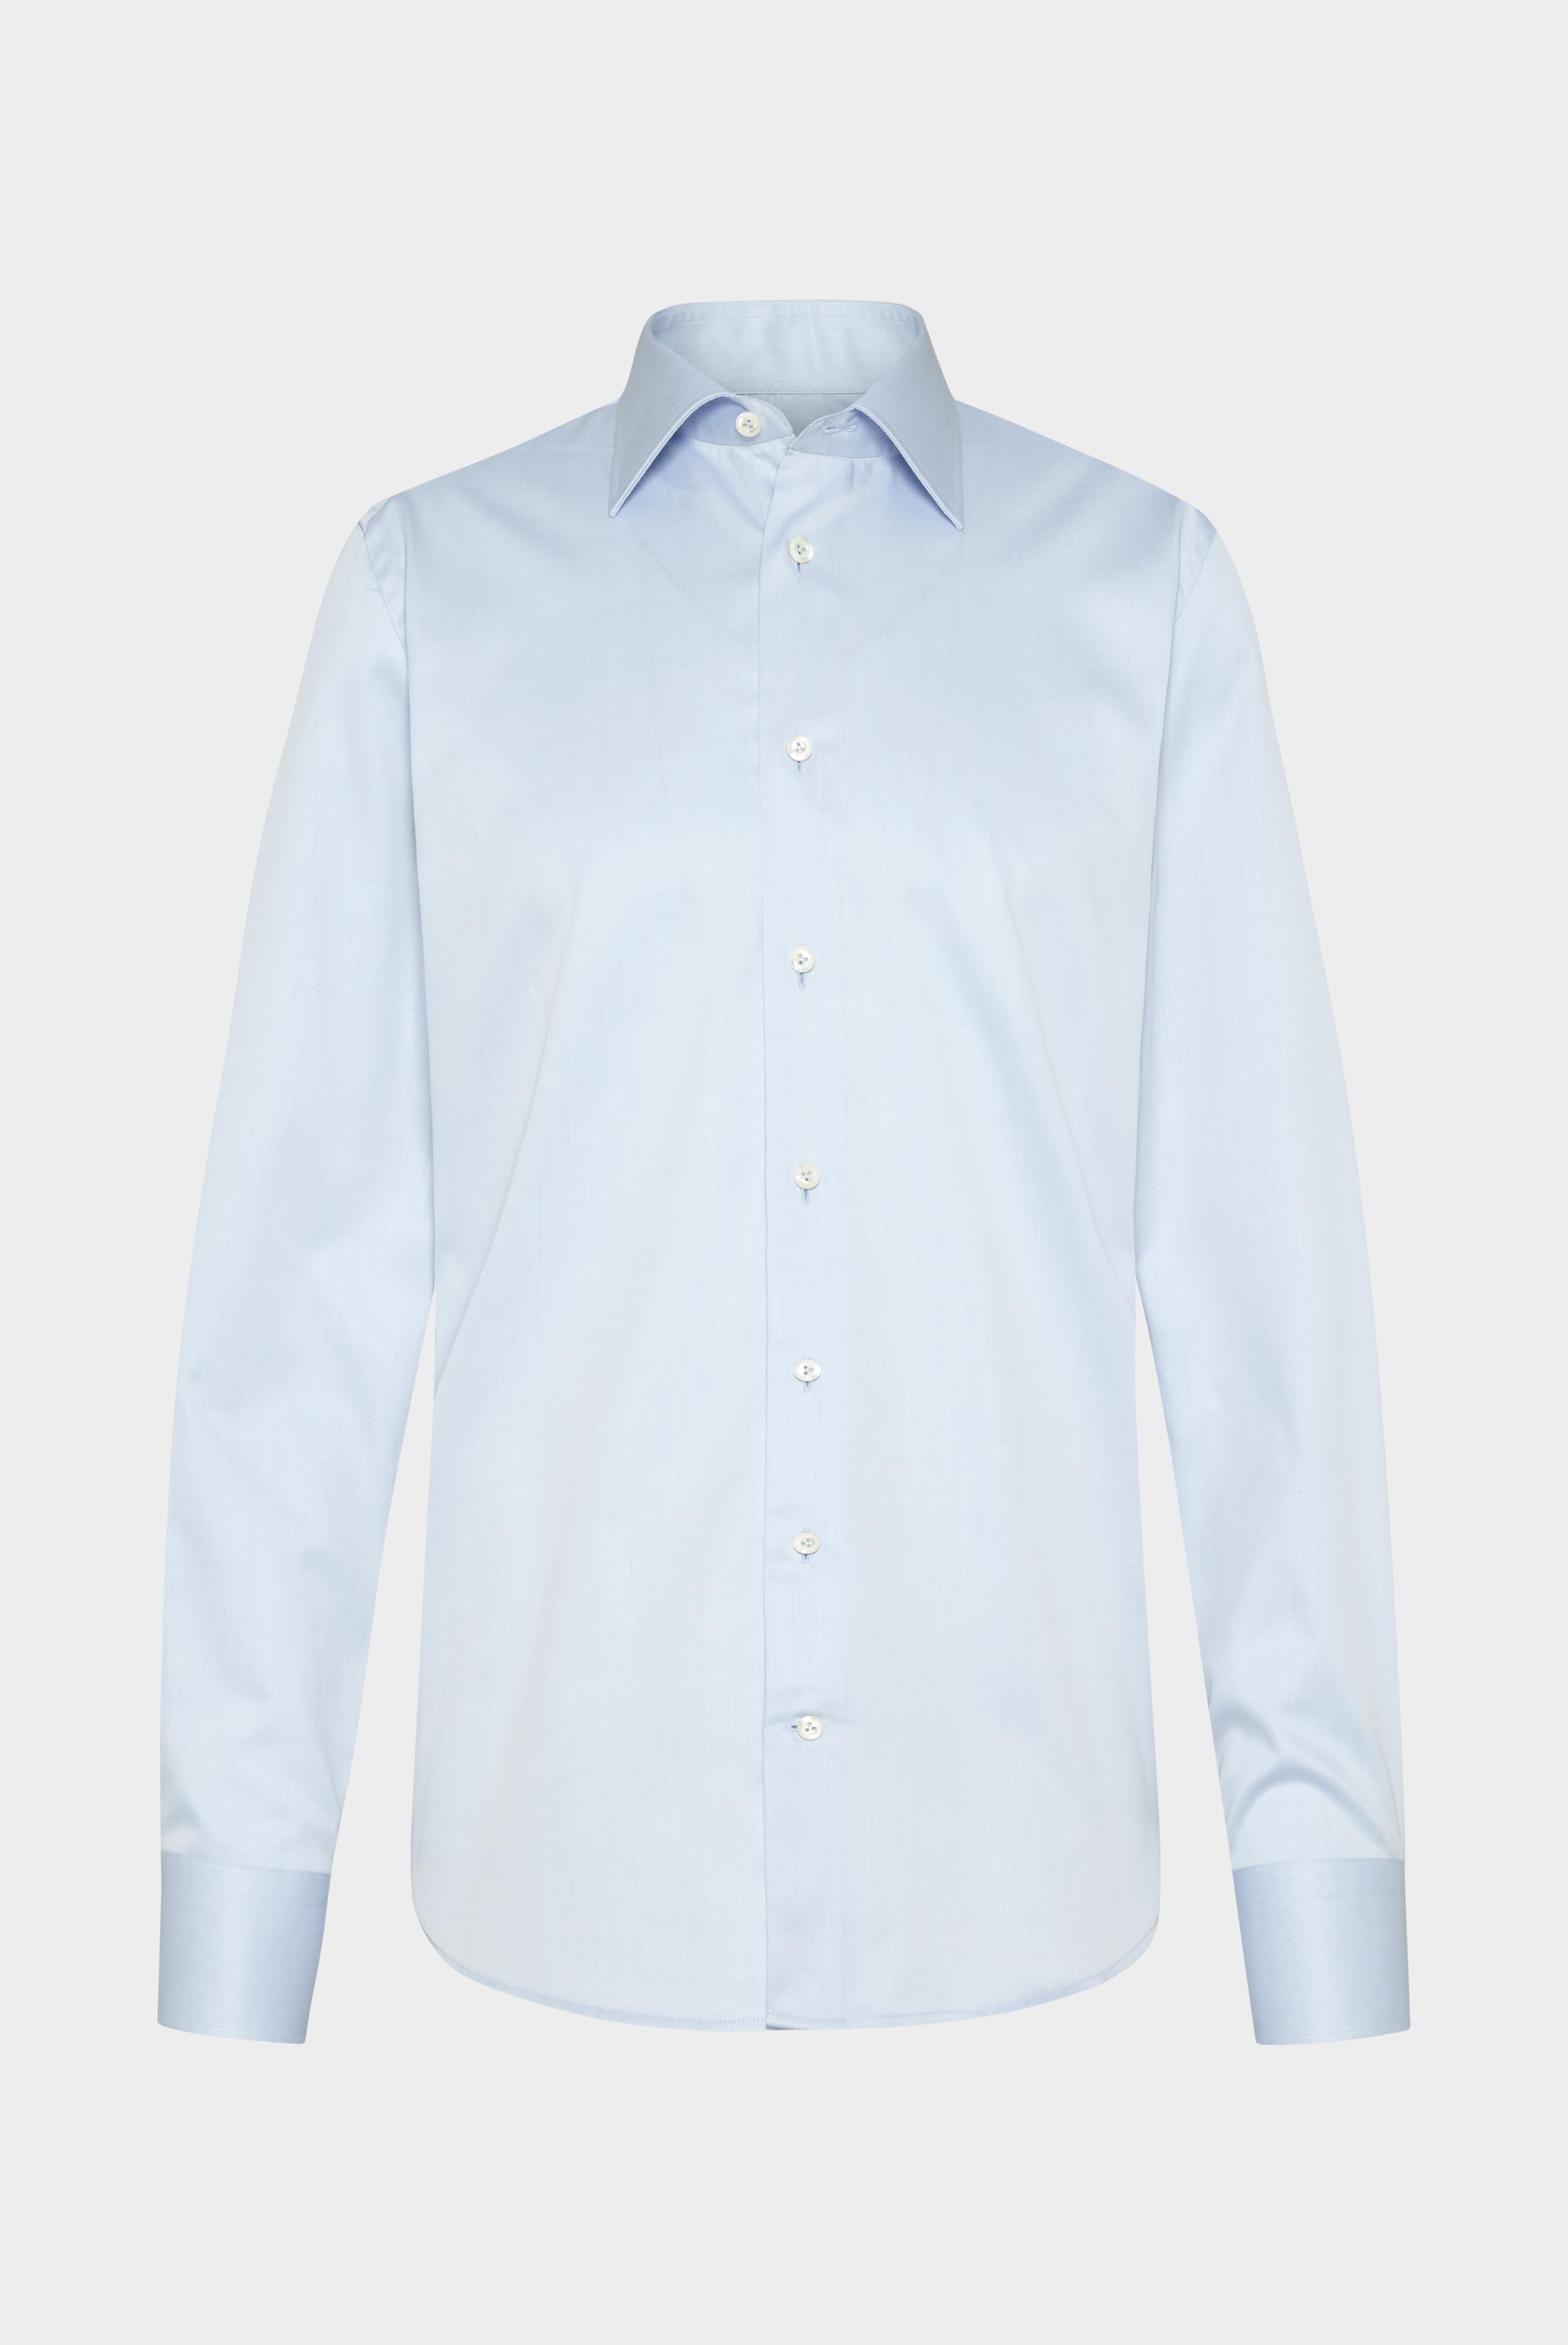 Easy Iron Shirts+Wrinkle Free Twill Shirt Comfort Fit+20.2046.BQ.132241.720.37